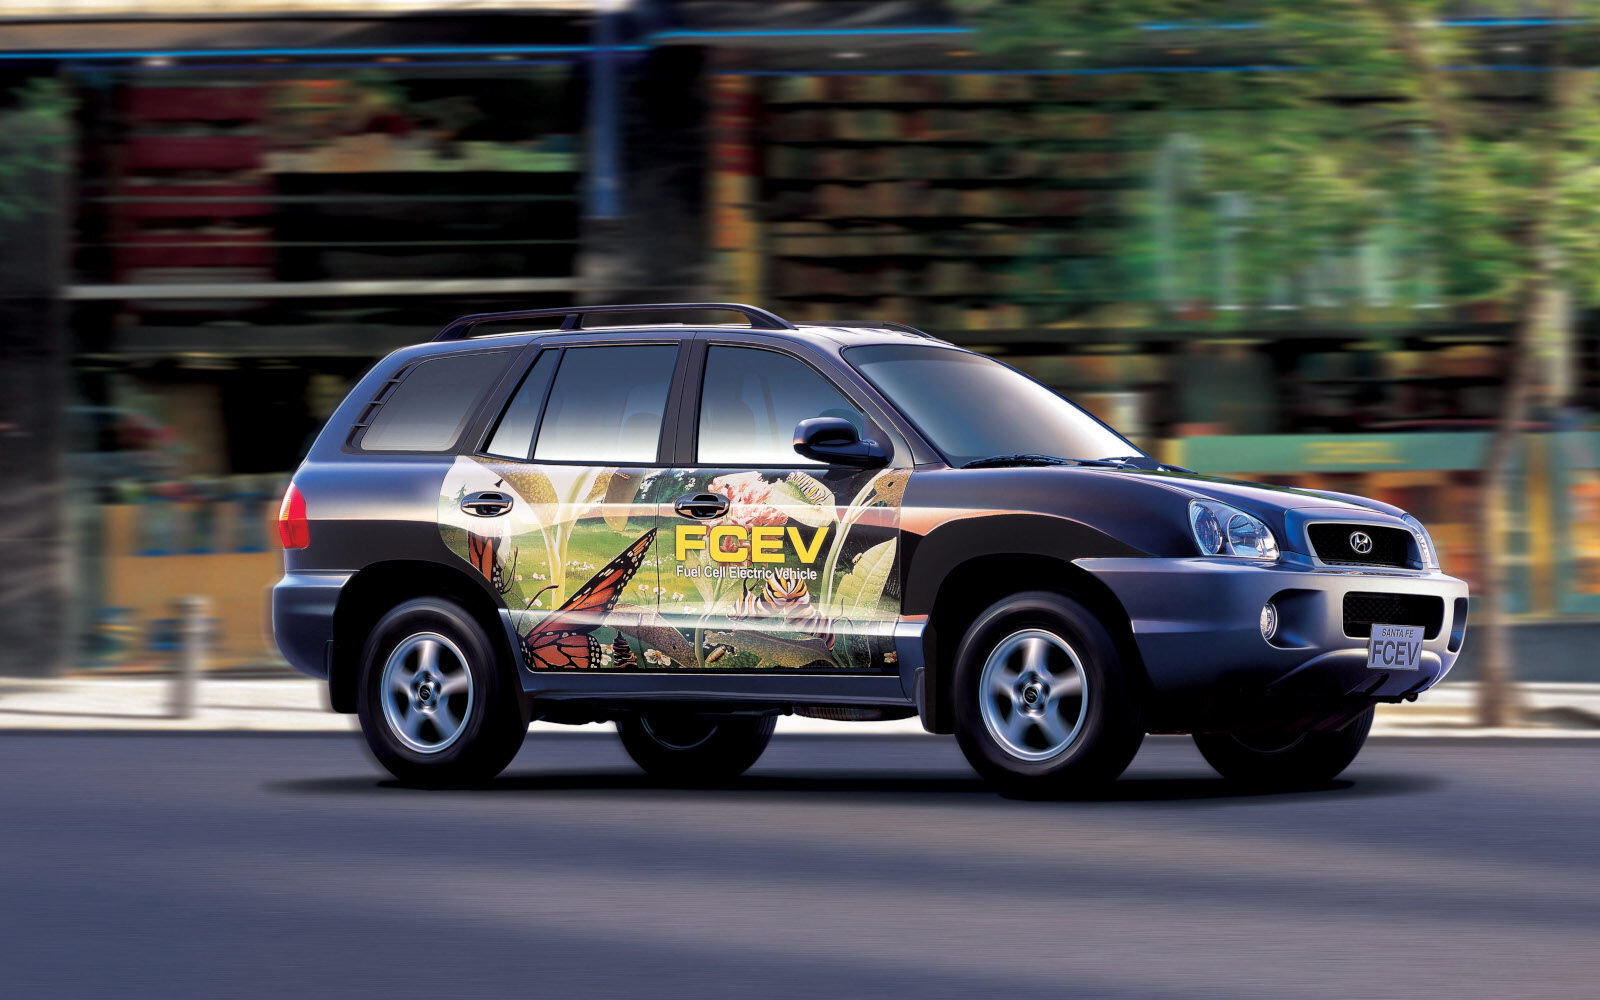 Hyundai Santa Fe Fuel Cell Electric Vehicle (FCEV) z roku 2000 nabízel výkon 75 kW a dojezd 230 kilometrů